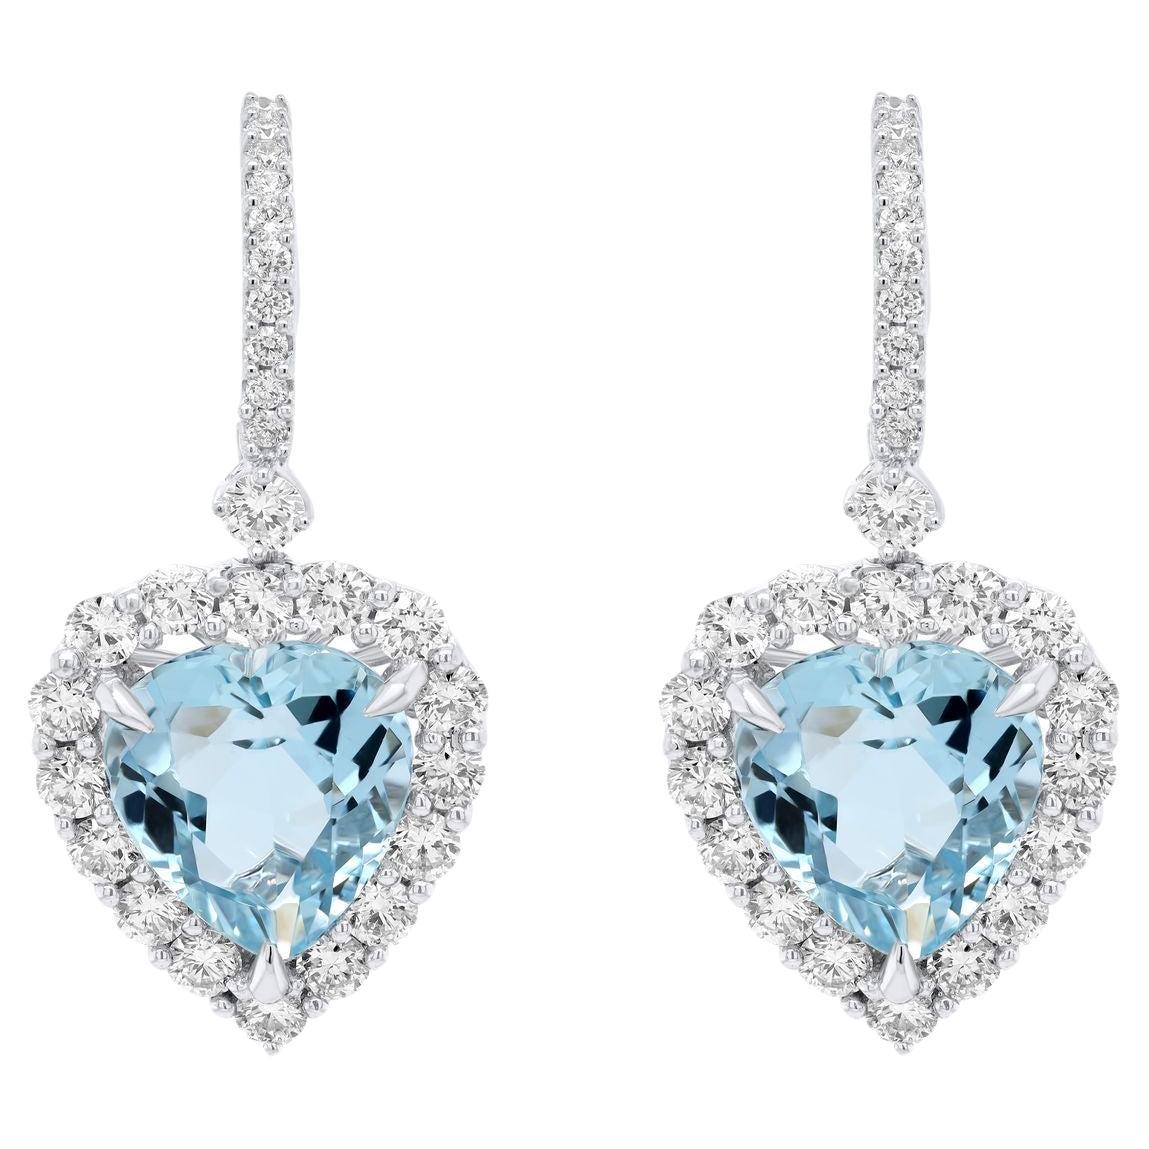 Diana M 18kt White Gold Heart Aquamarine & Diamond Fashion Earrings